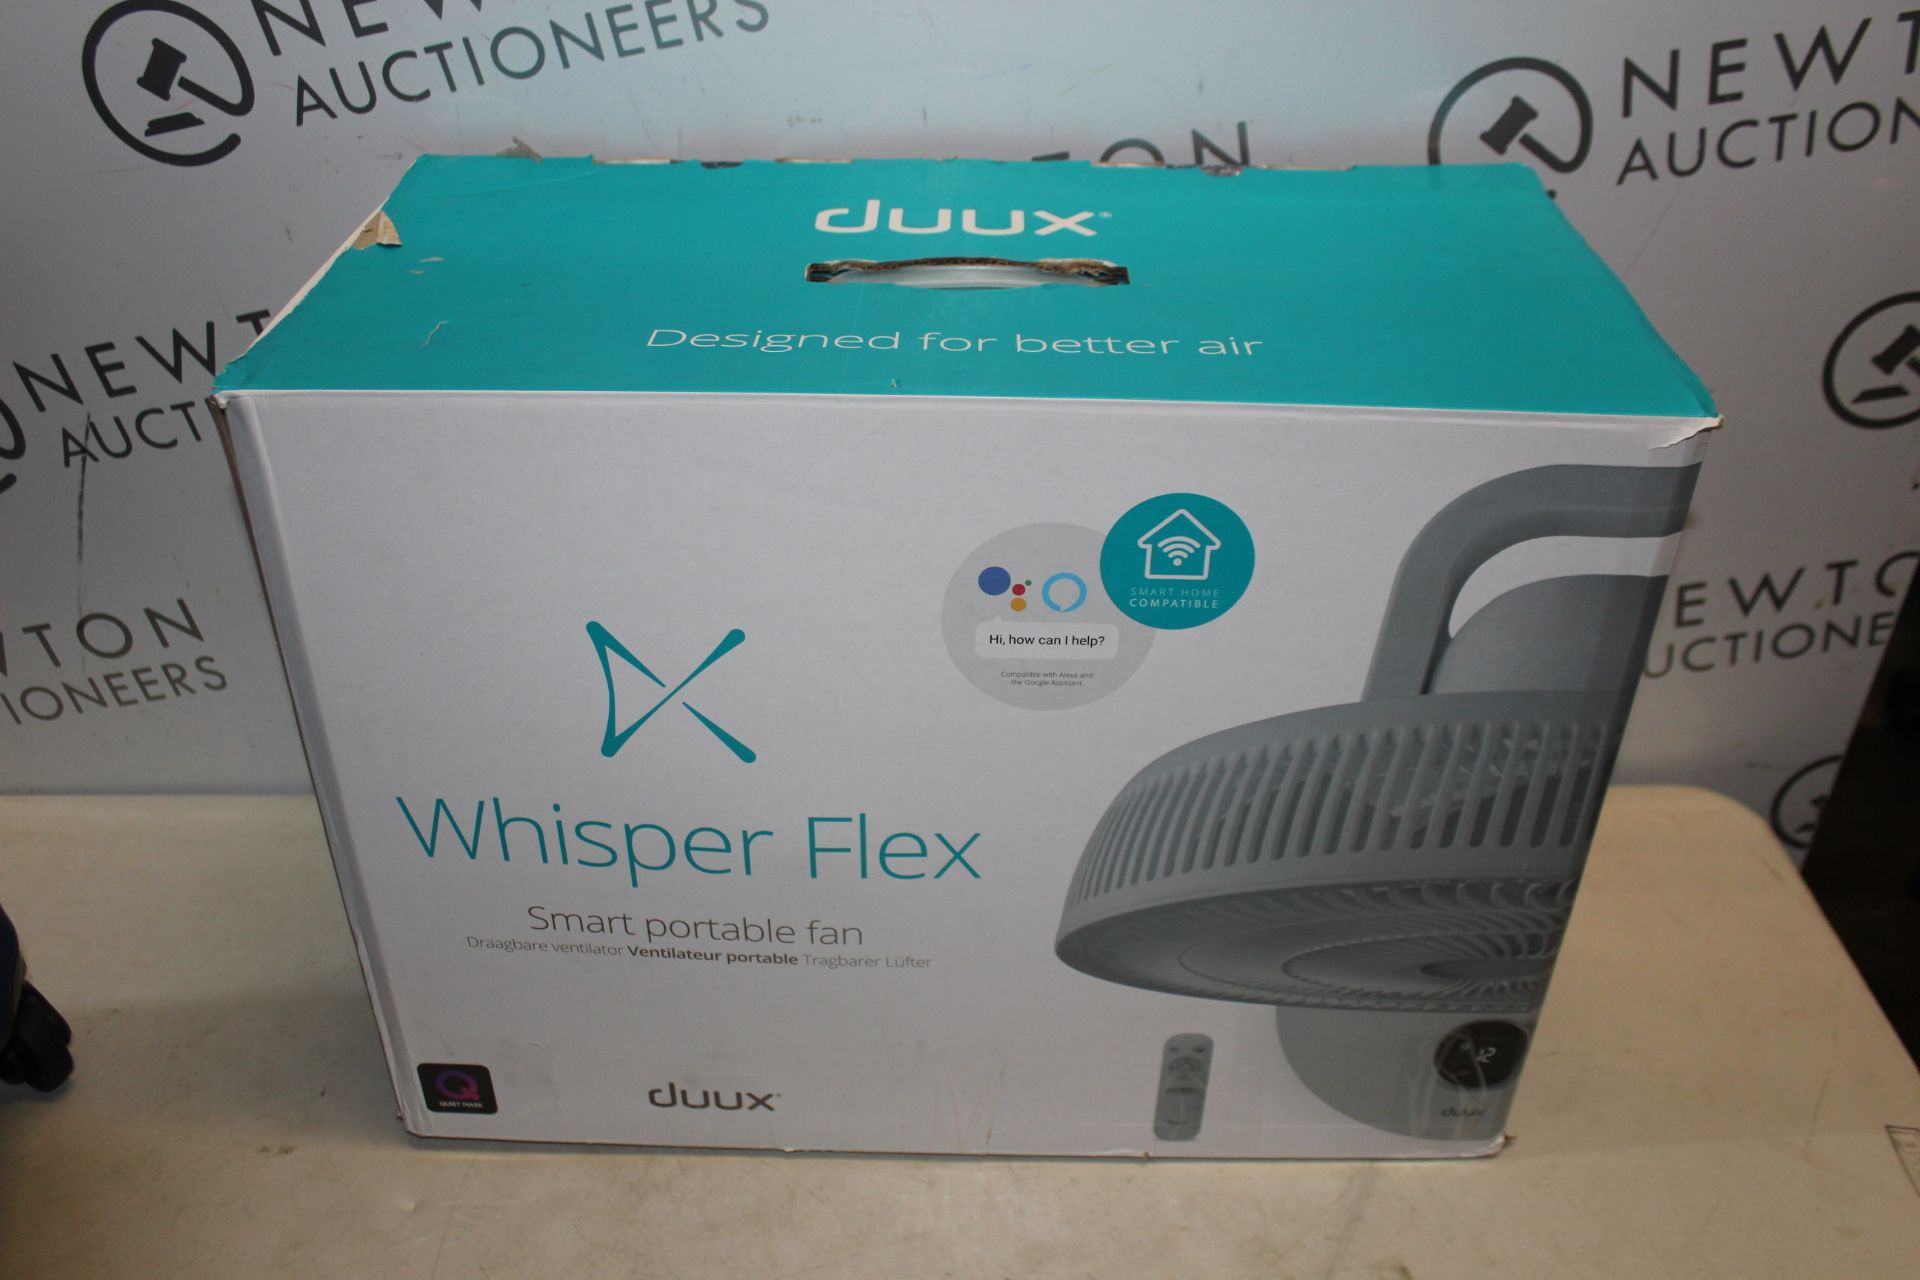 1 BOXED DUUX 13" WHISPER FLEX SMART PEDESTAL FAN RRP Â£99.99